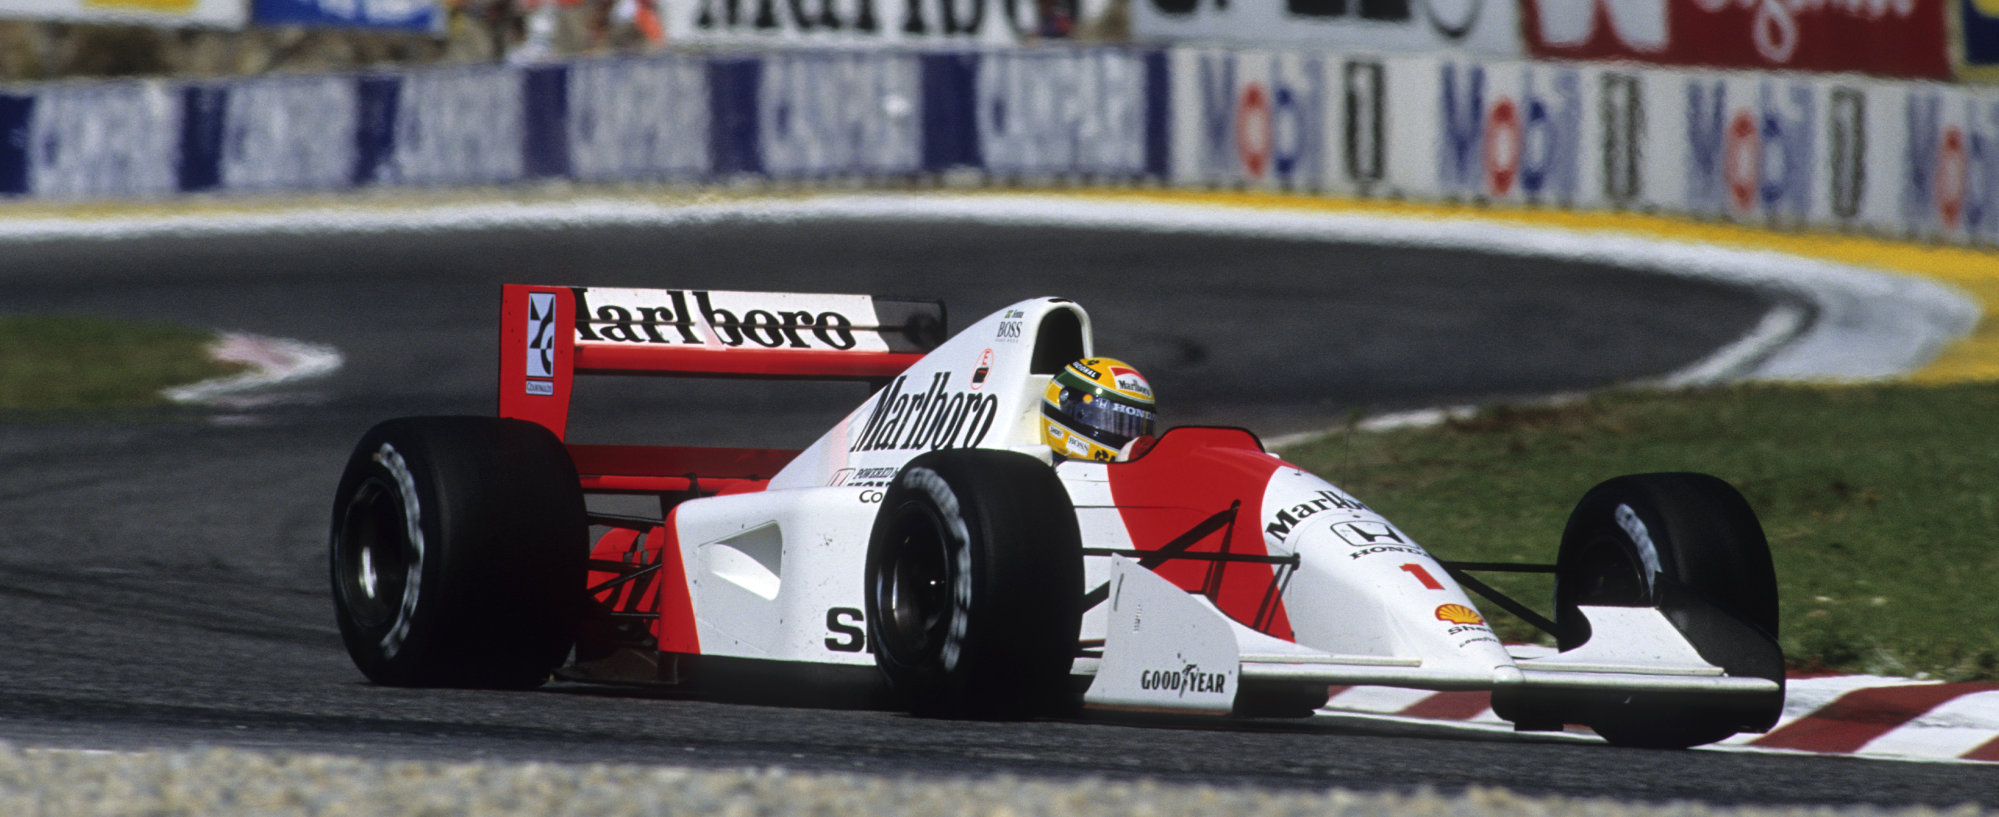 Ayrton Senna in his McLaren